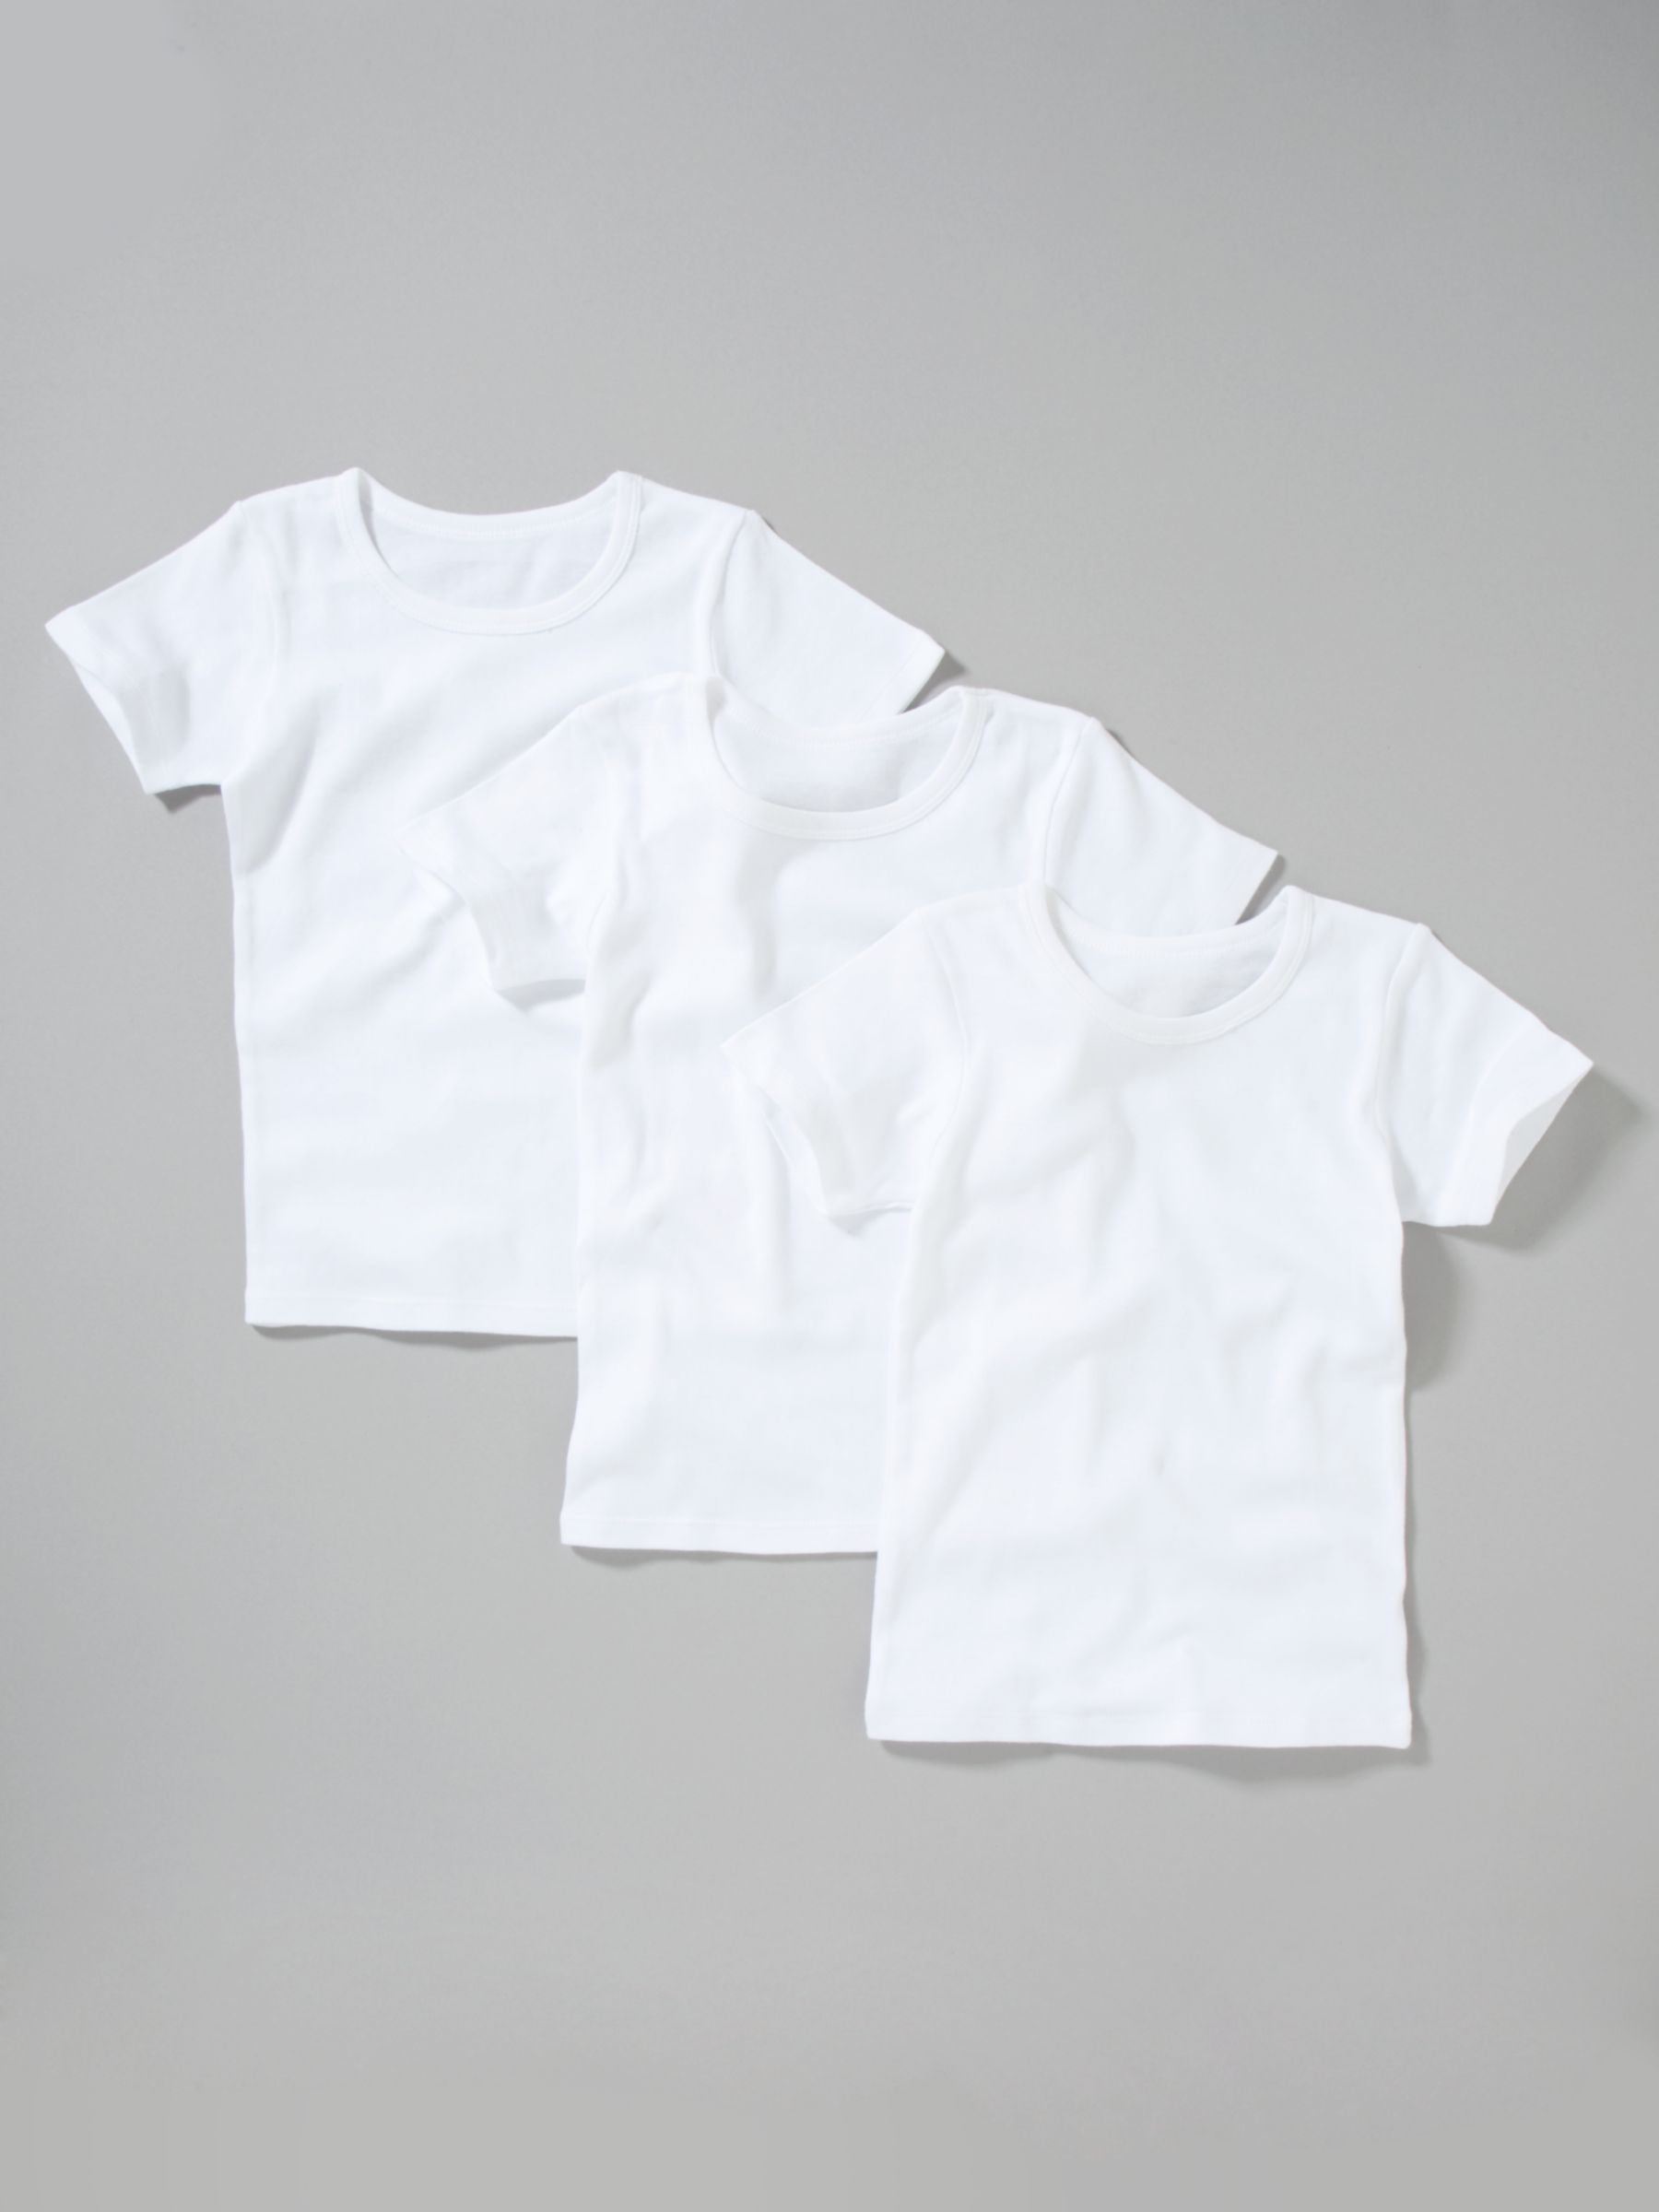 John Lewis & Partners Boy Cotton T-Shirt Vests, Pack of 3, White